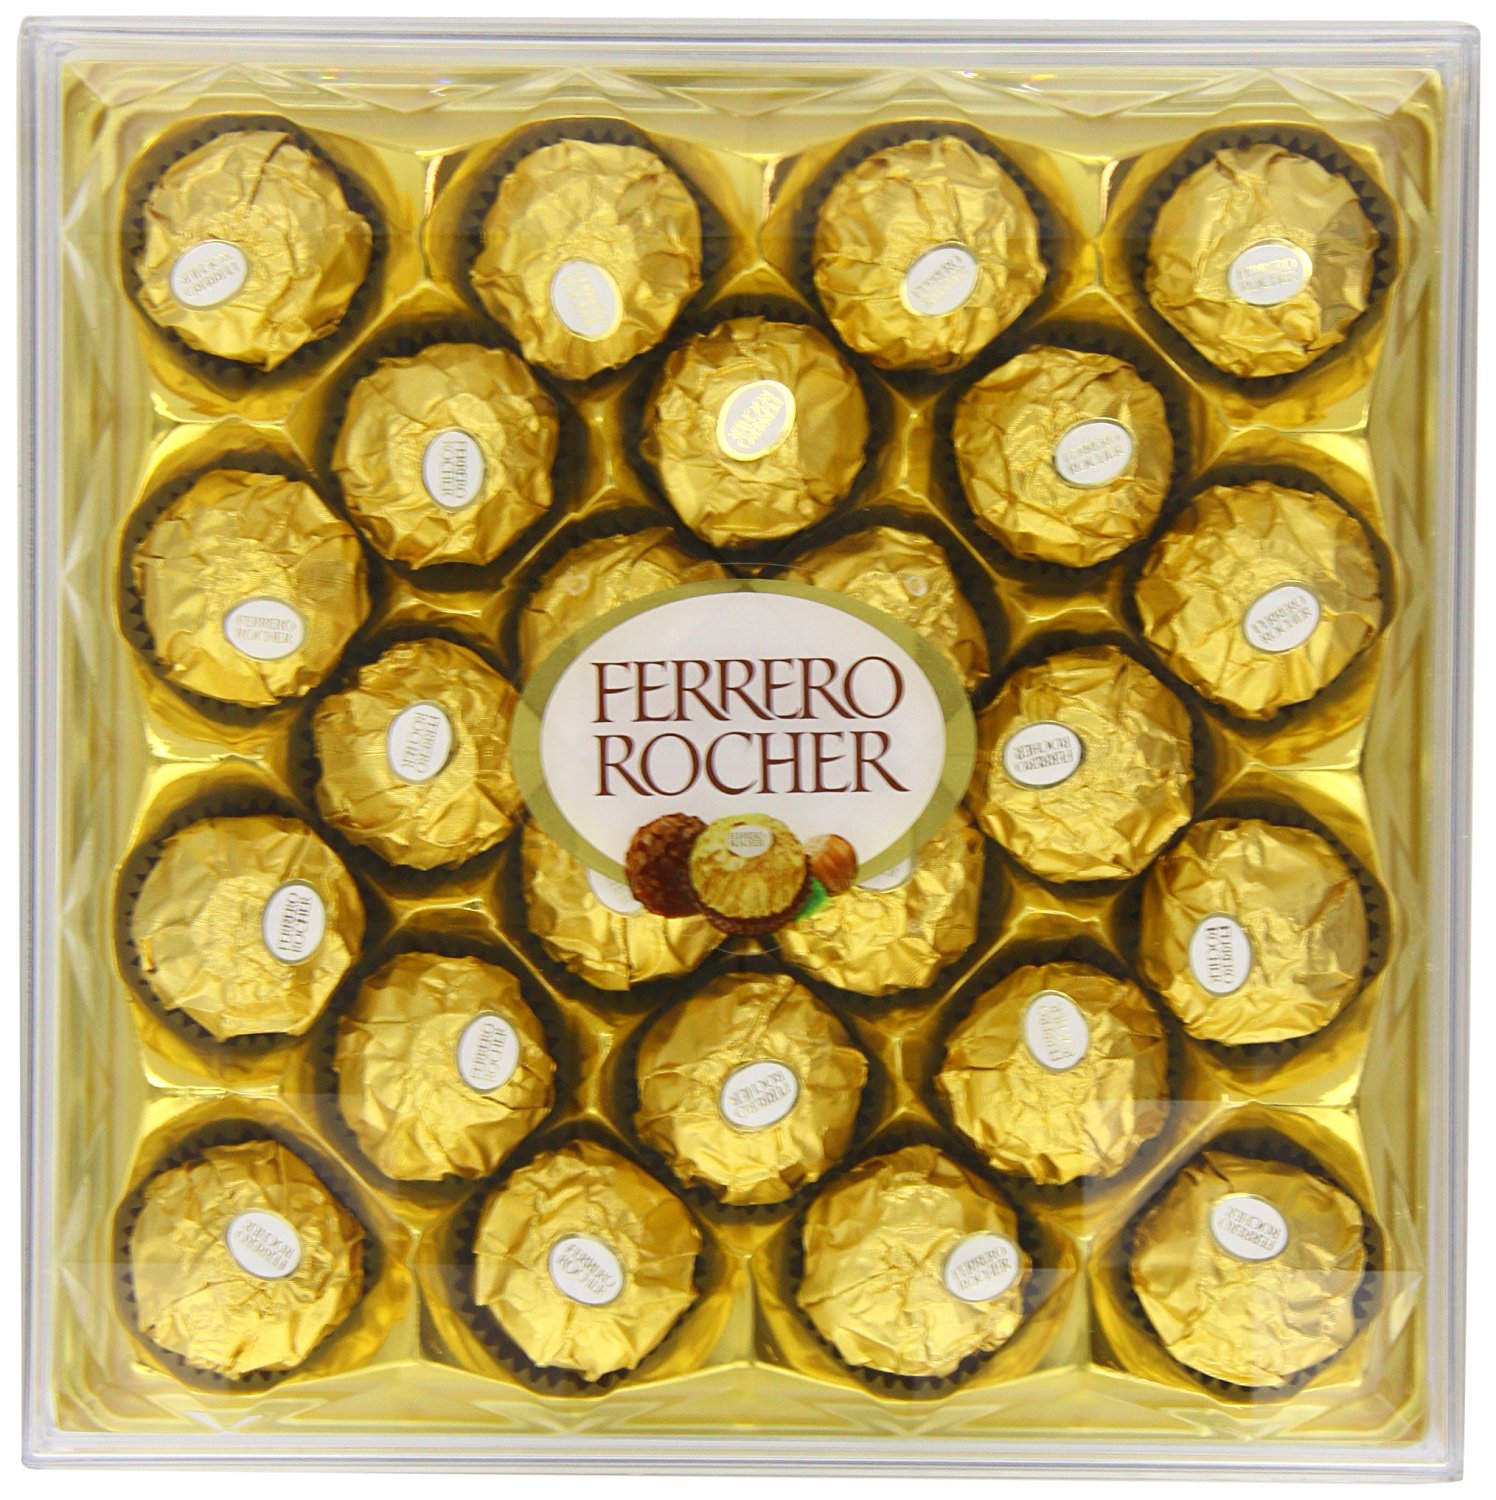 Coffret de 24 Ferrero Rocher - Nos gammes de produits - Ulysse Tunisie